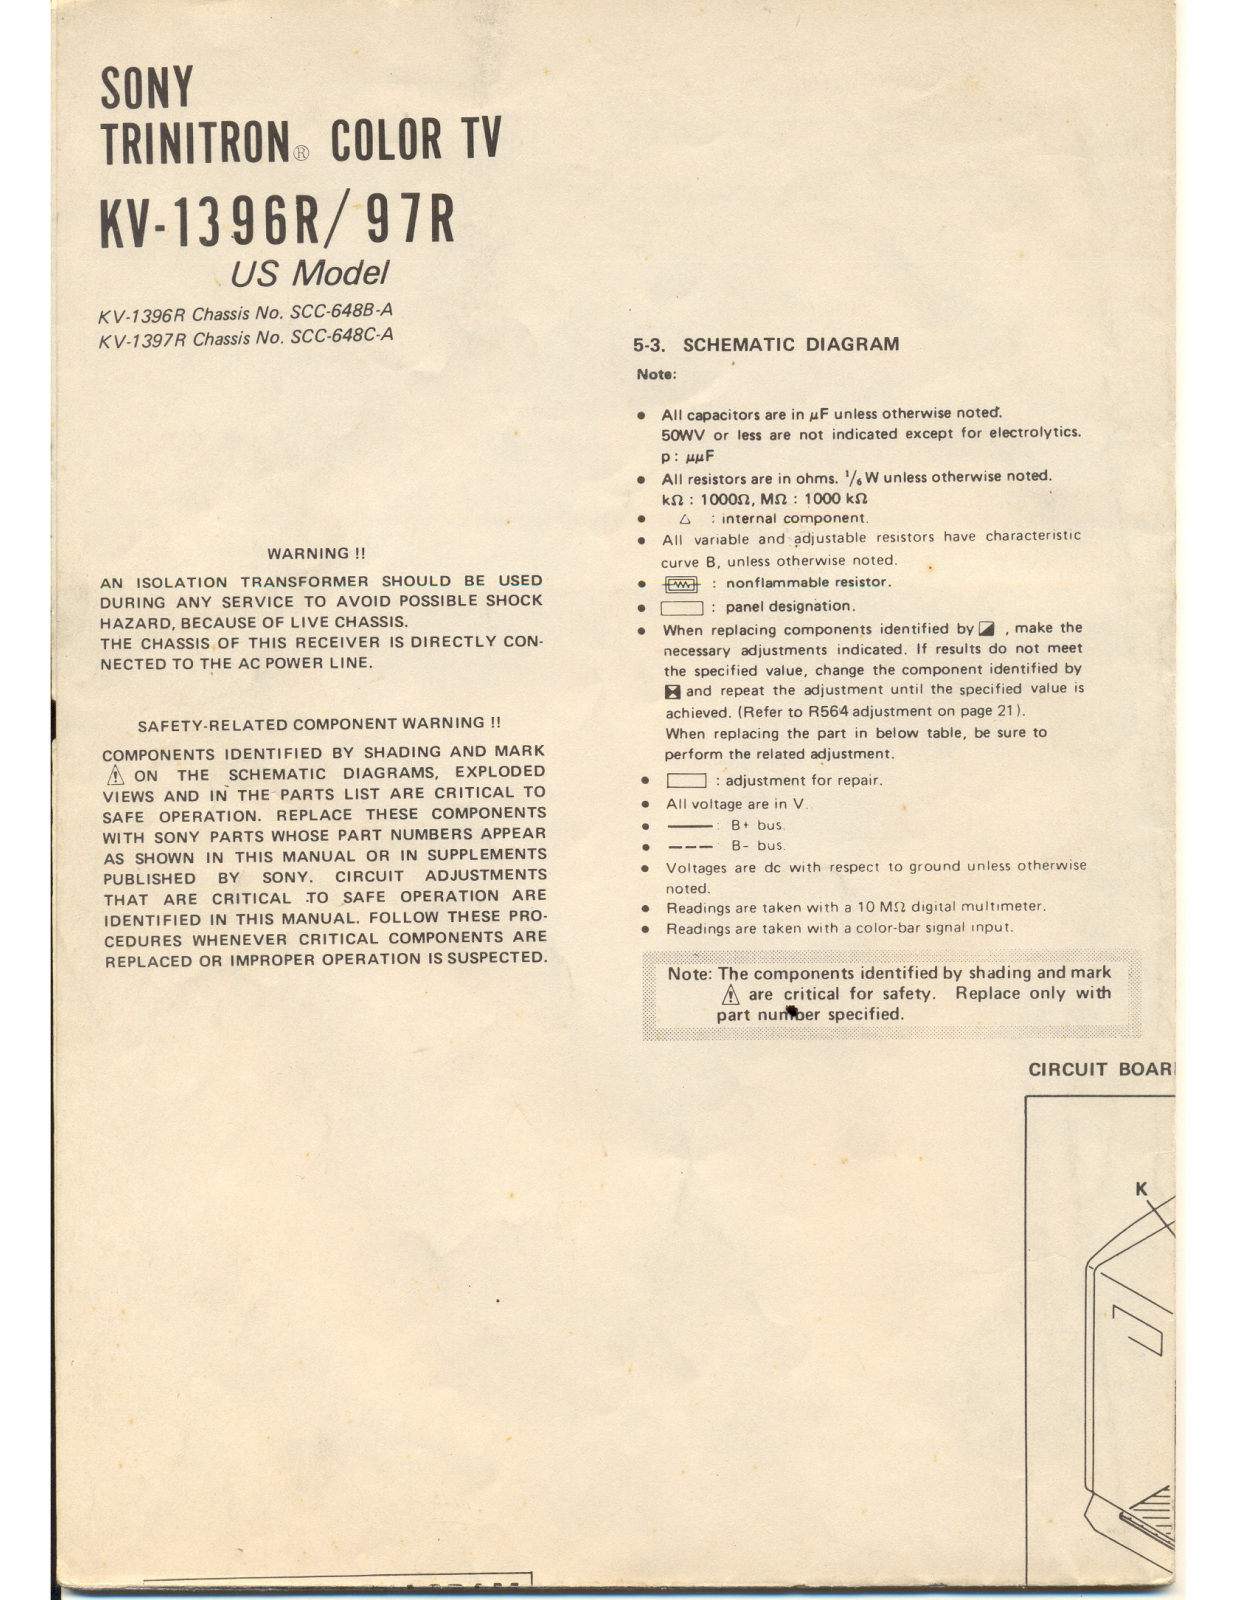 SONY KV 1397R Service Manual